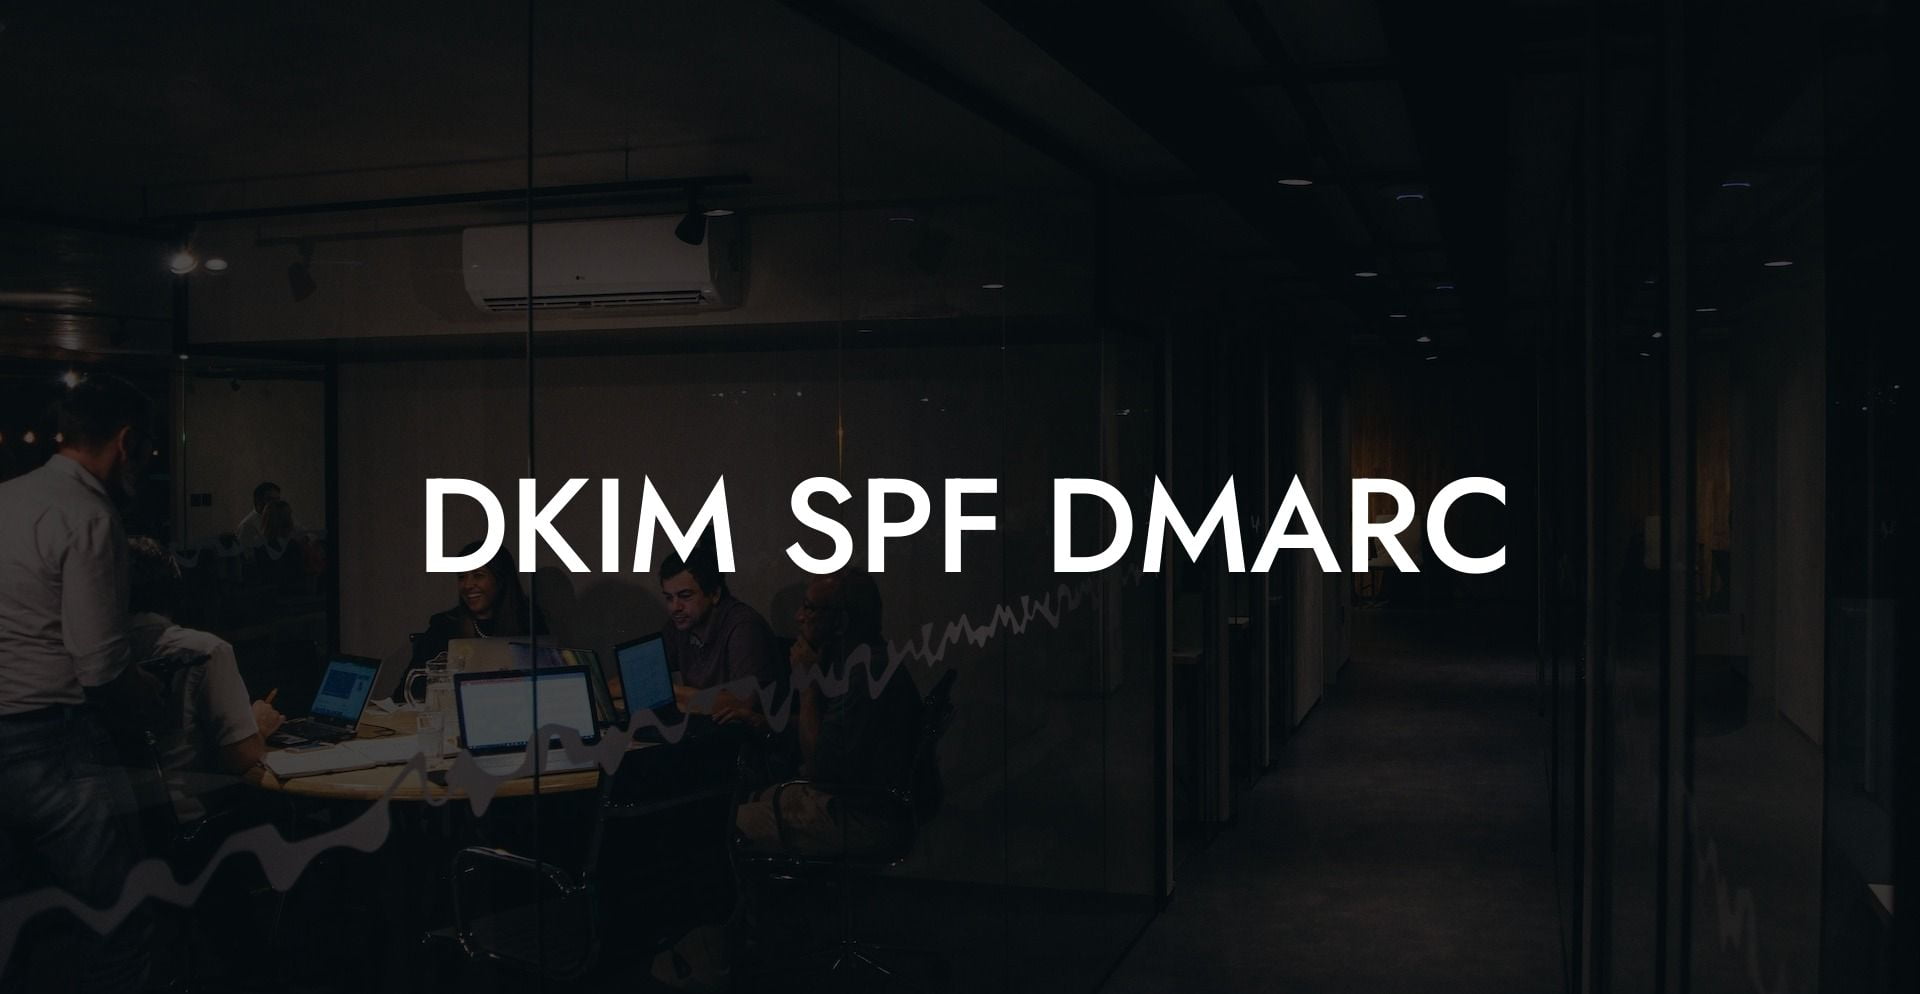 DKIM SPF DMARC